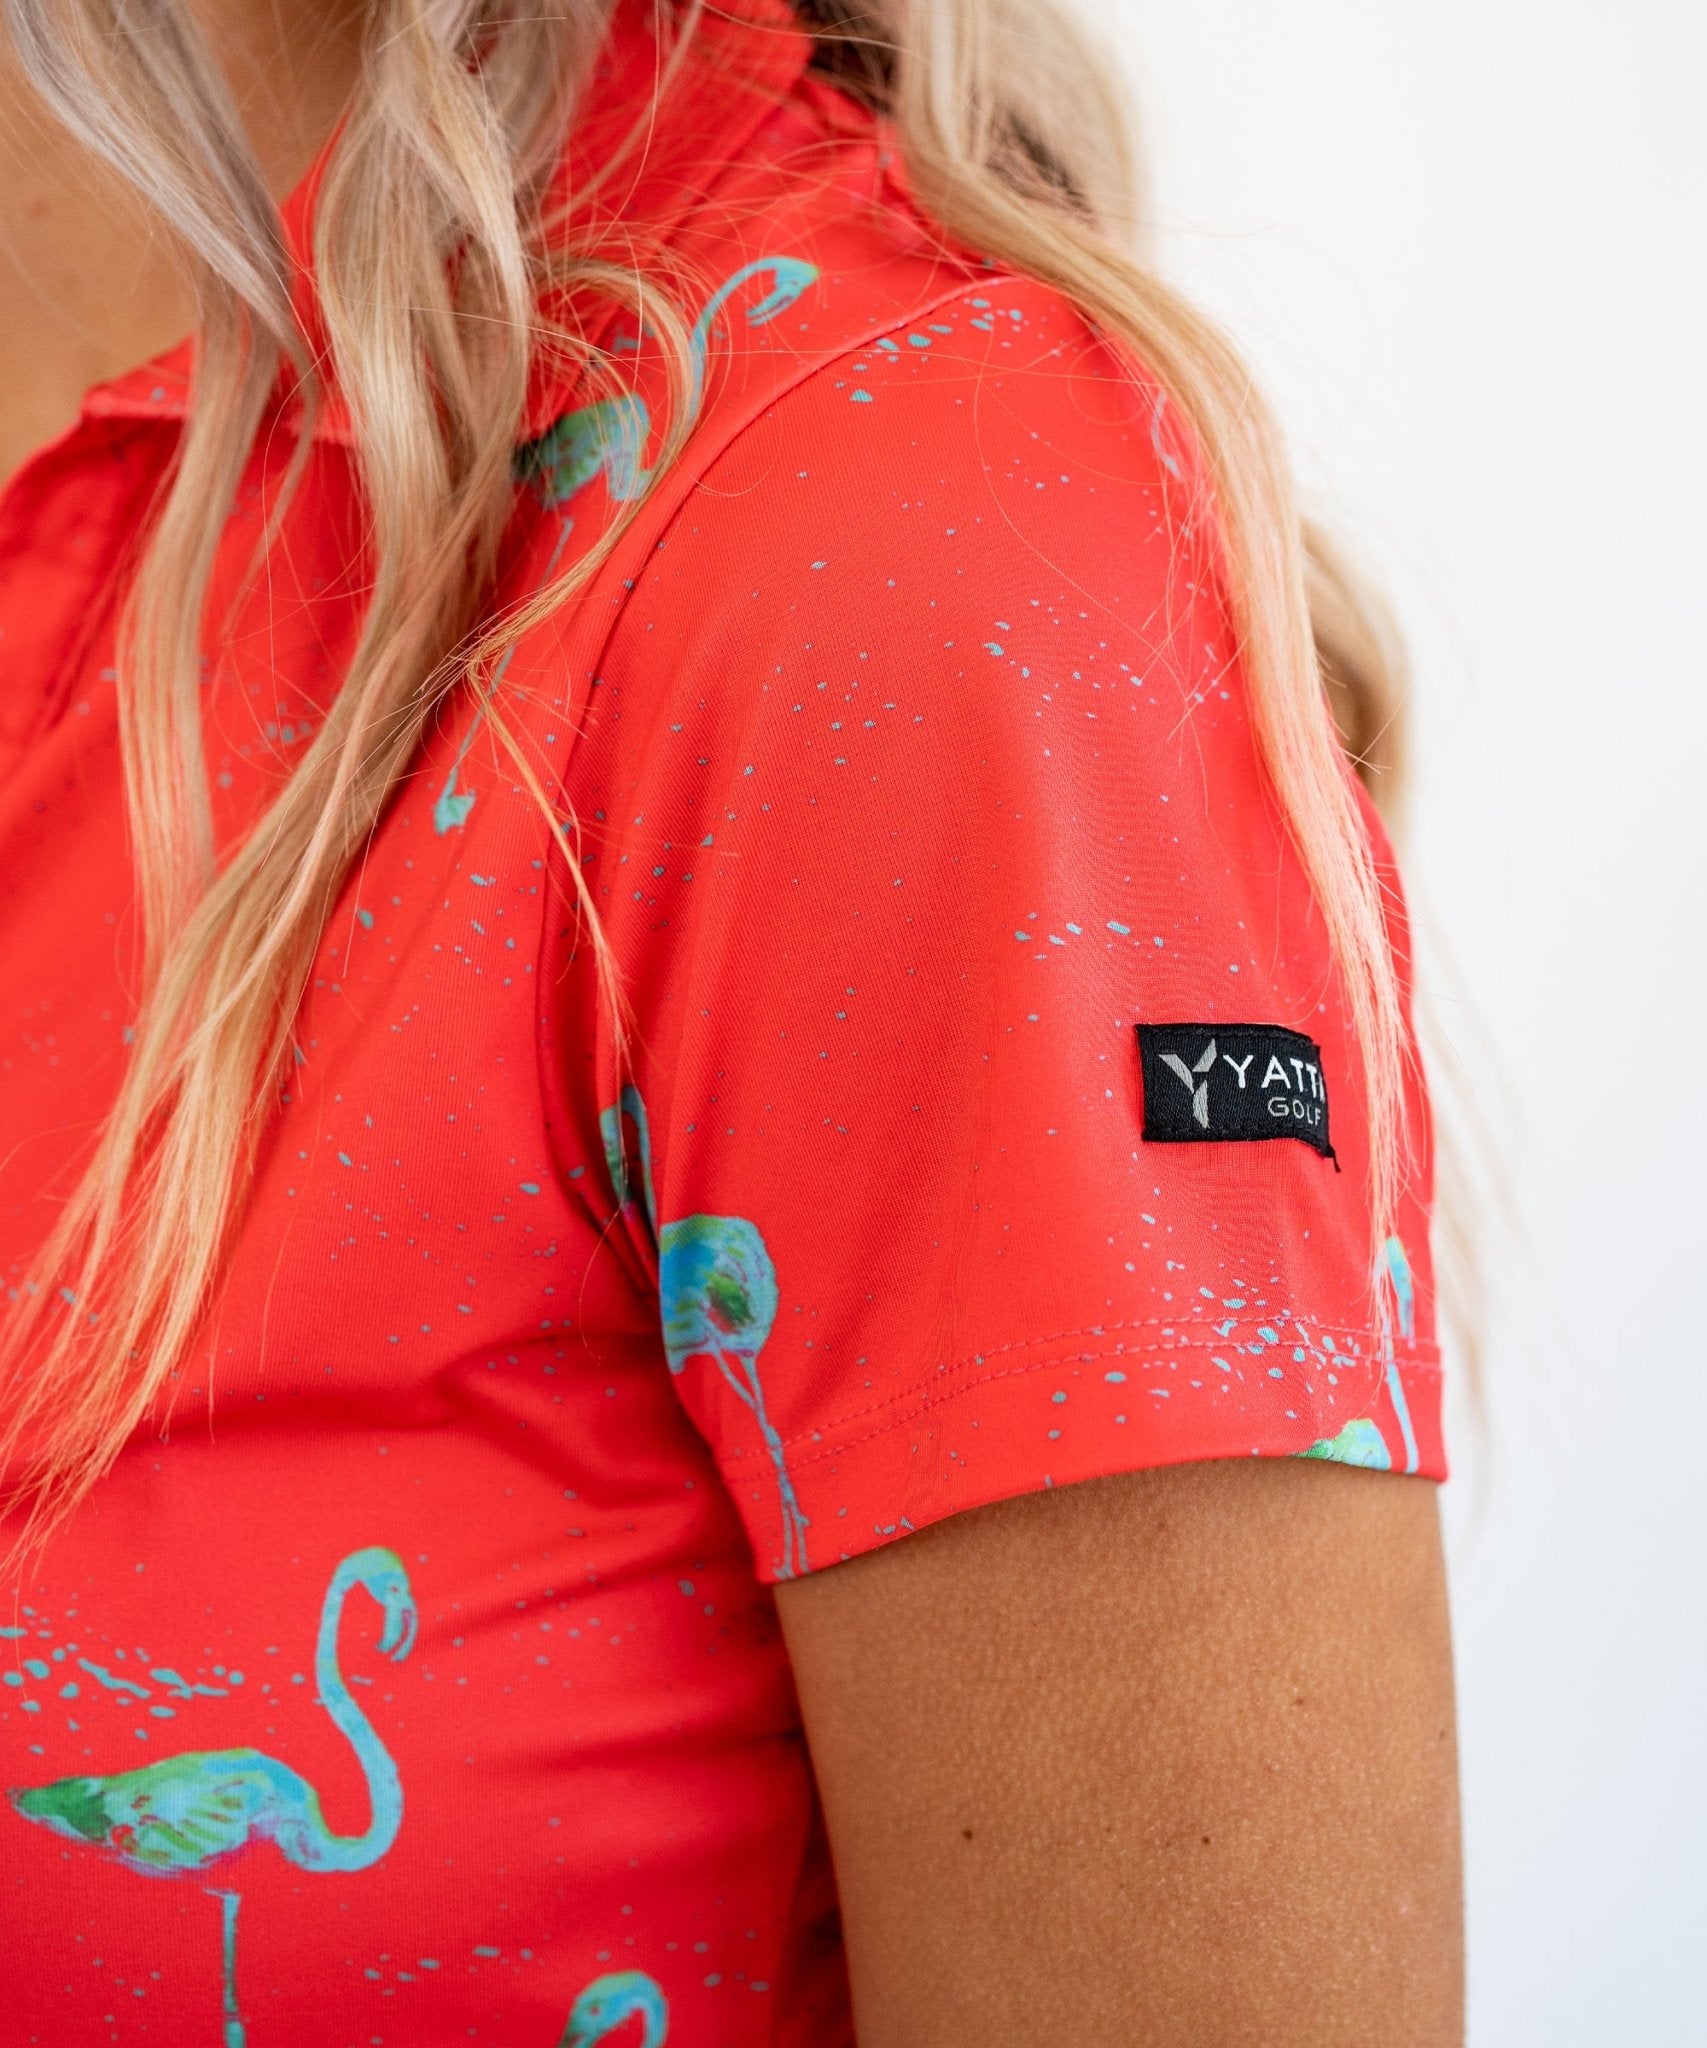 Flamingo Golf Shirts. Seriously Fantastic Flamingo Polos. Only $39.95. –  Yatta Golf